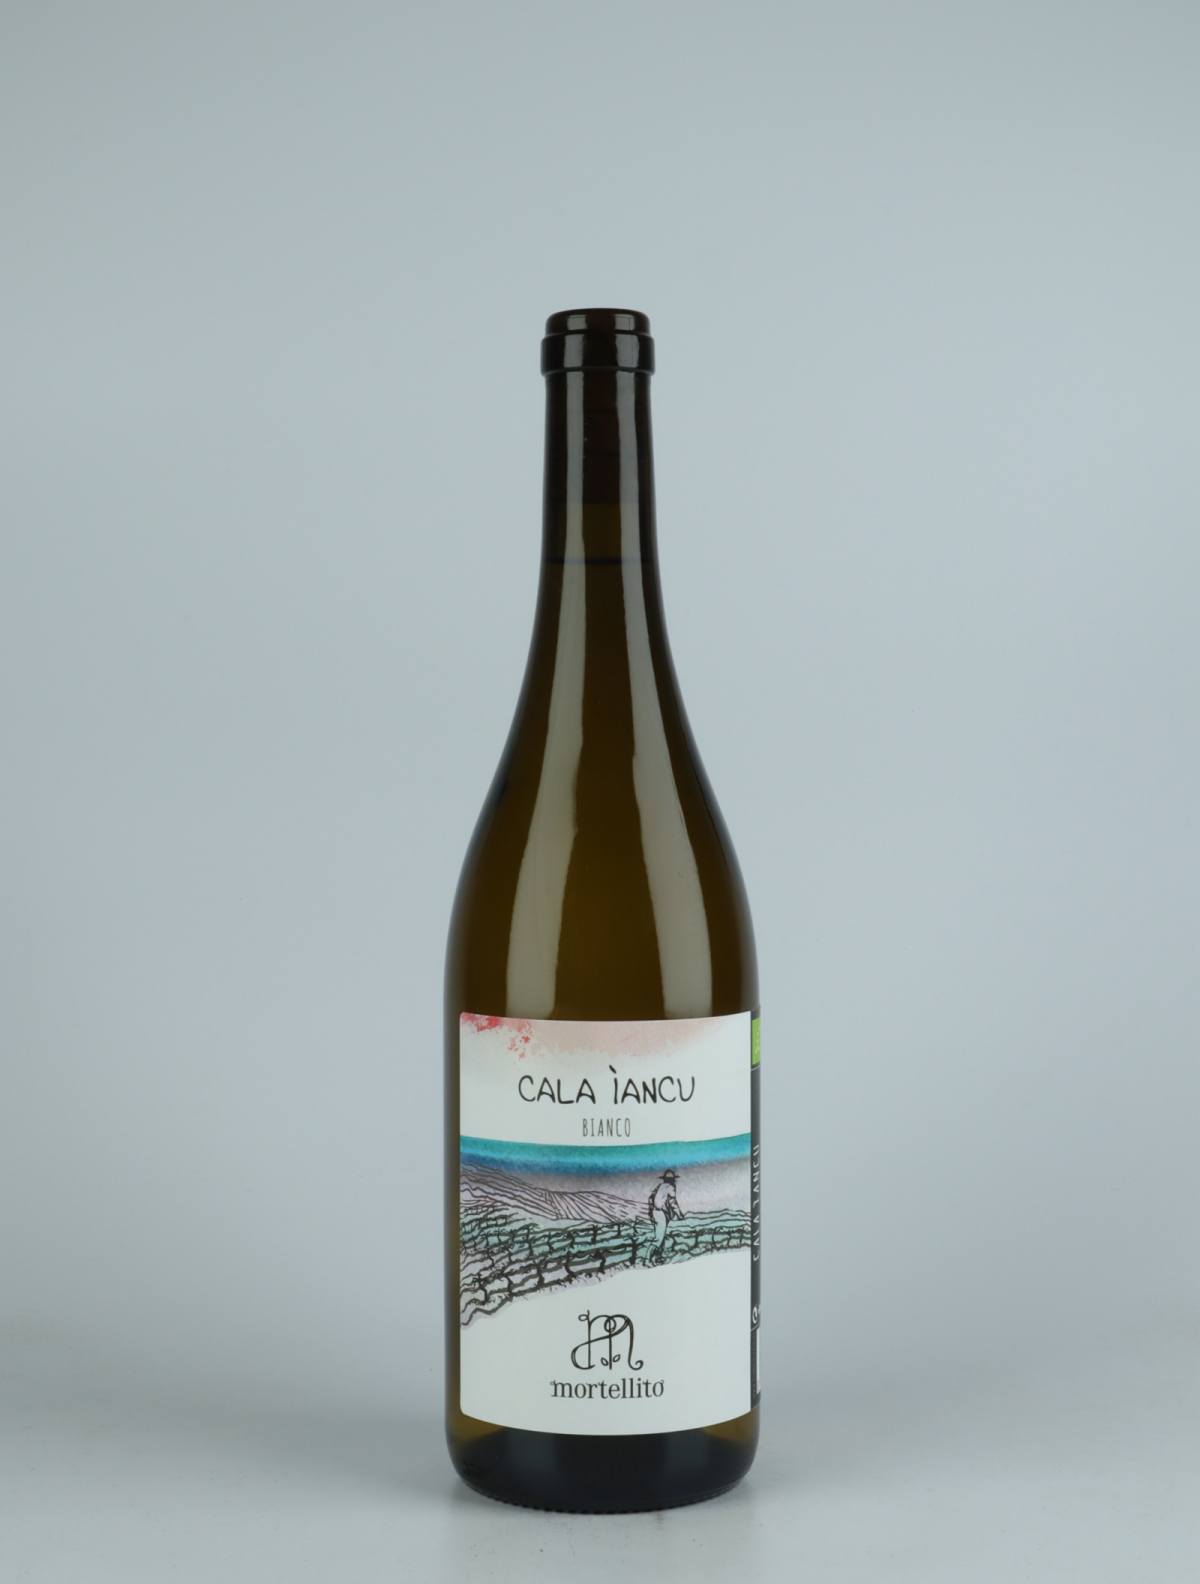 A bottle 2021 Cala Iancu - Bianco White wine from Il Mortellito, Sicily in Italy